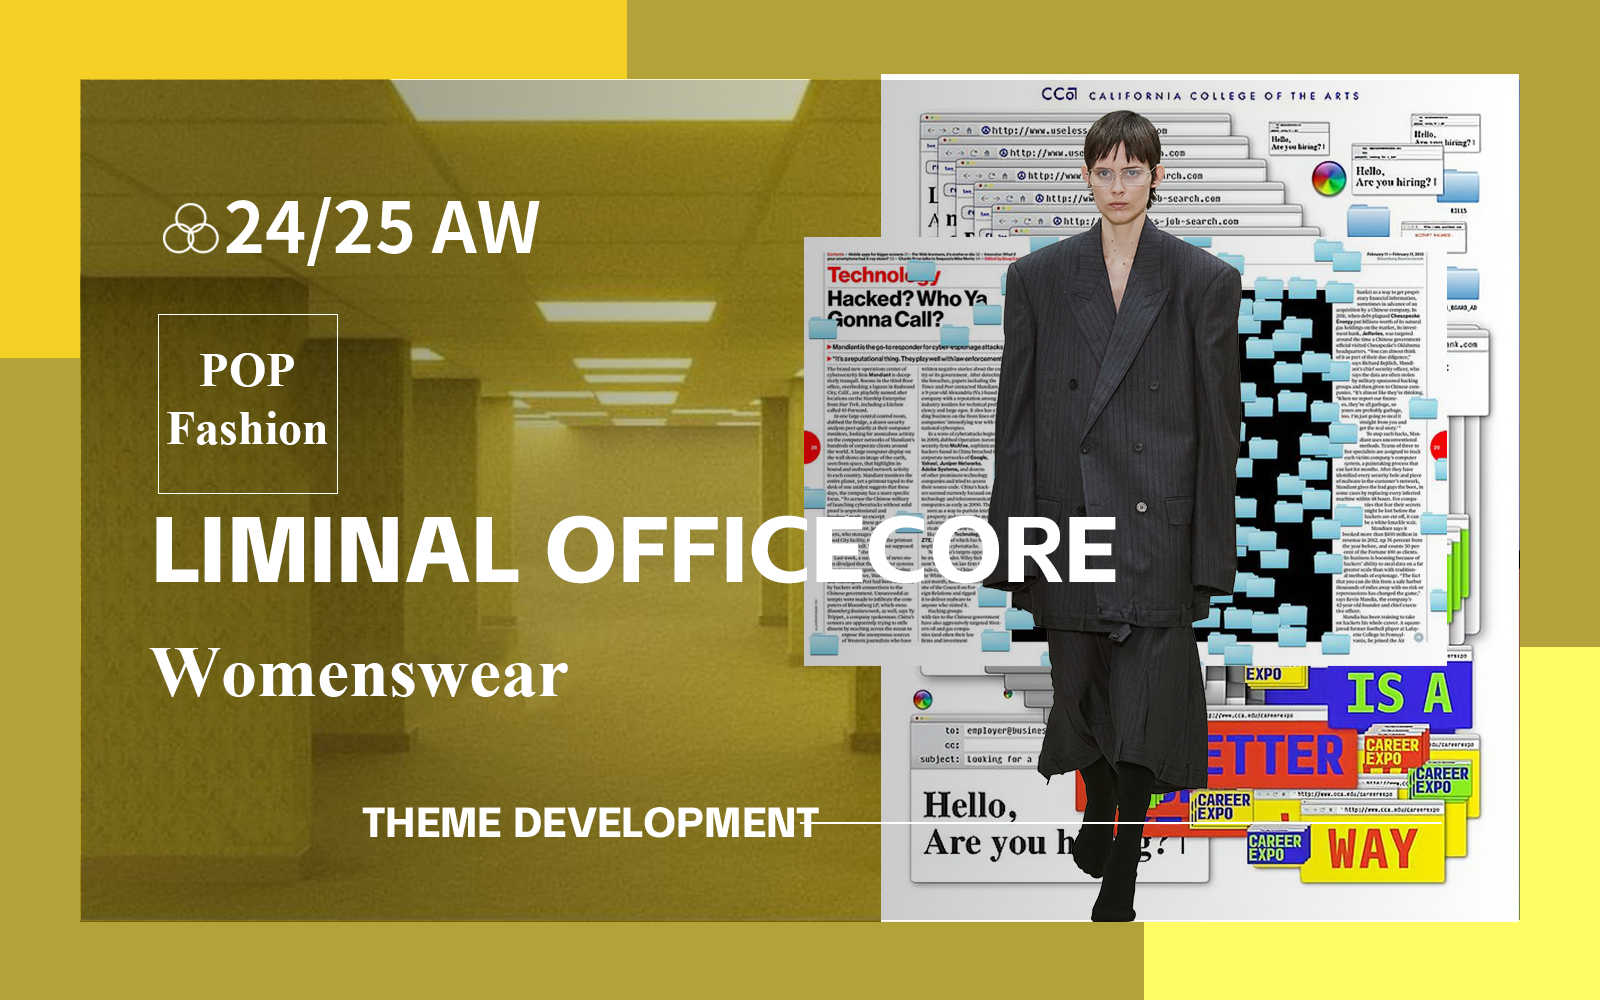 Liminal Officecore -- The Design Development of Womenswear